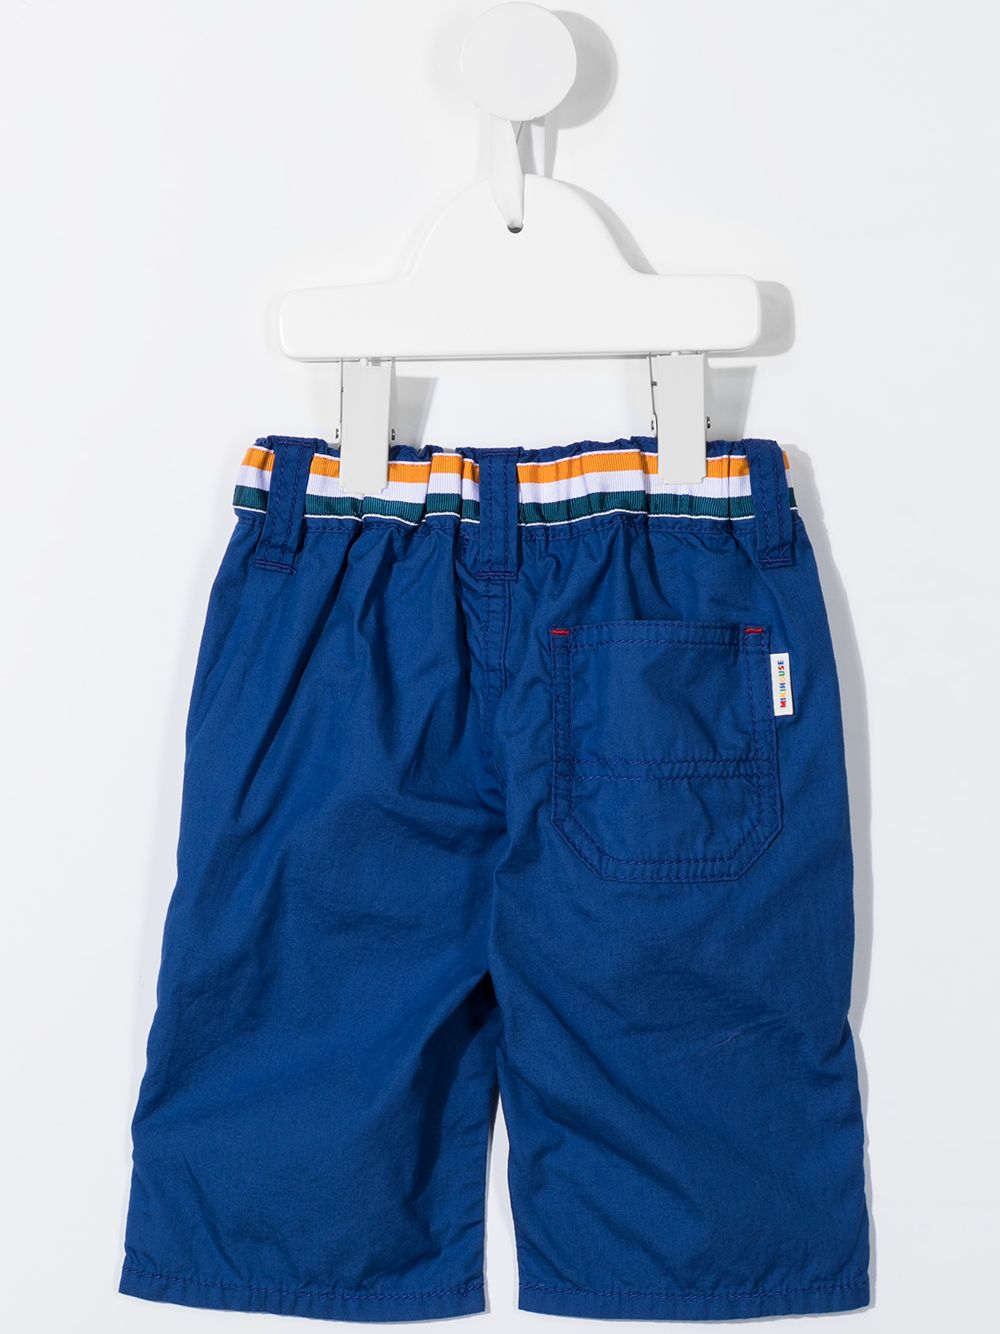 фото Miki house брюки с вышитым логотипом и полосками